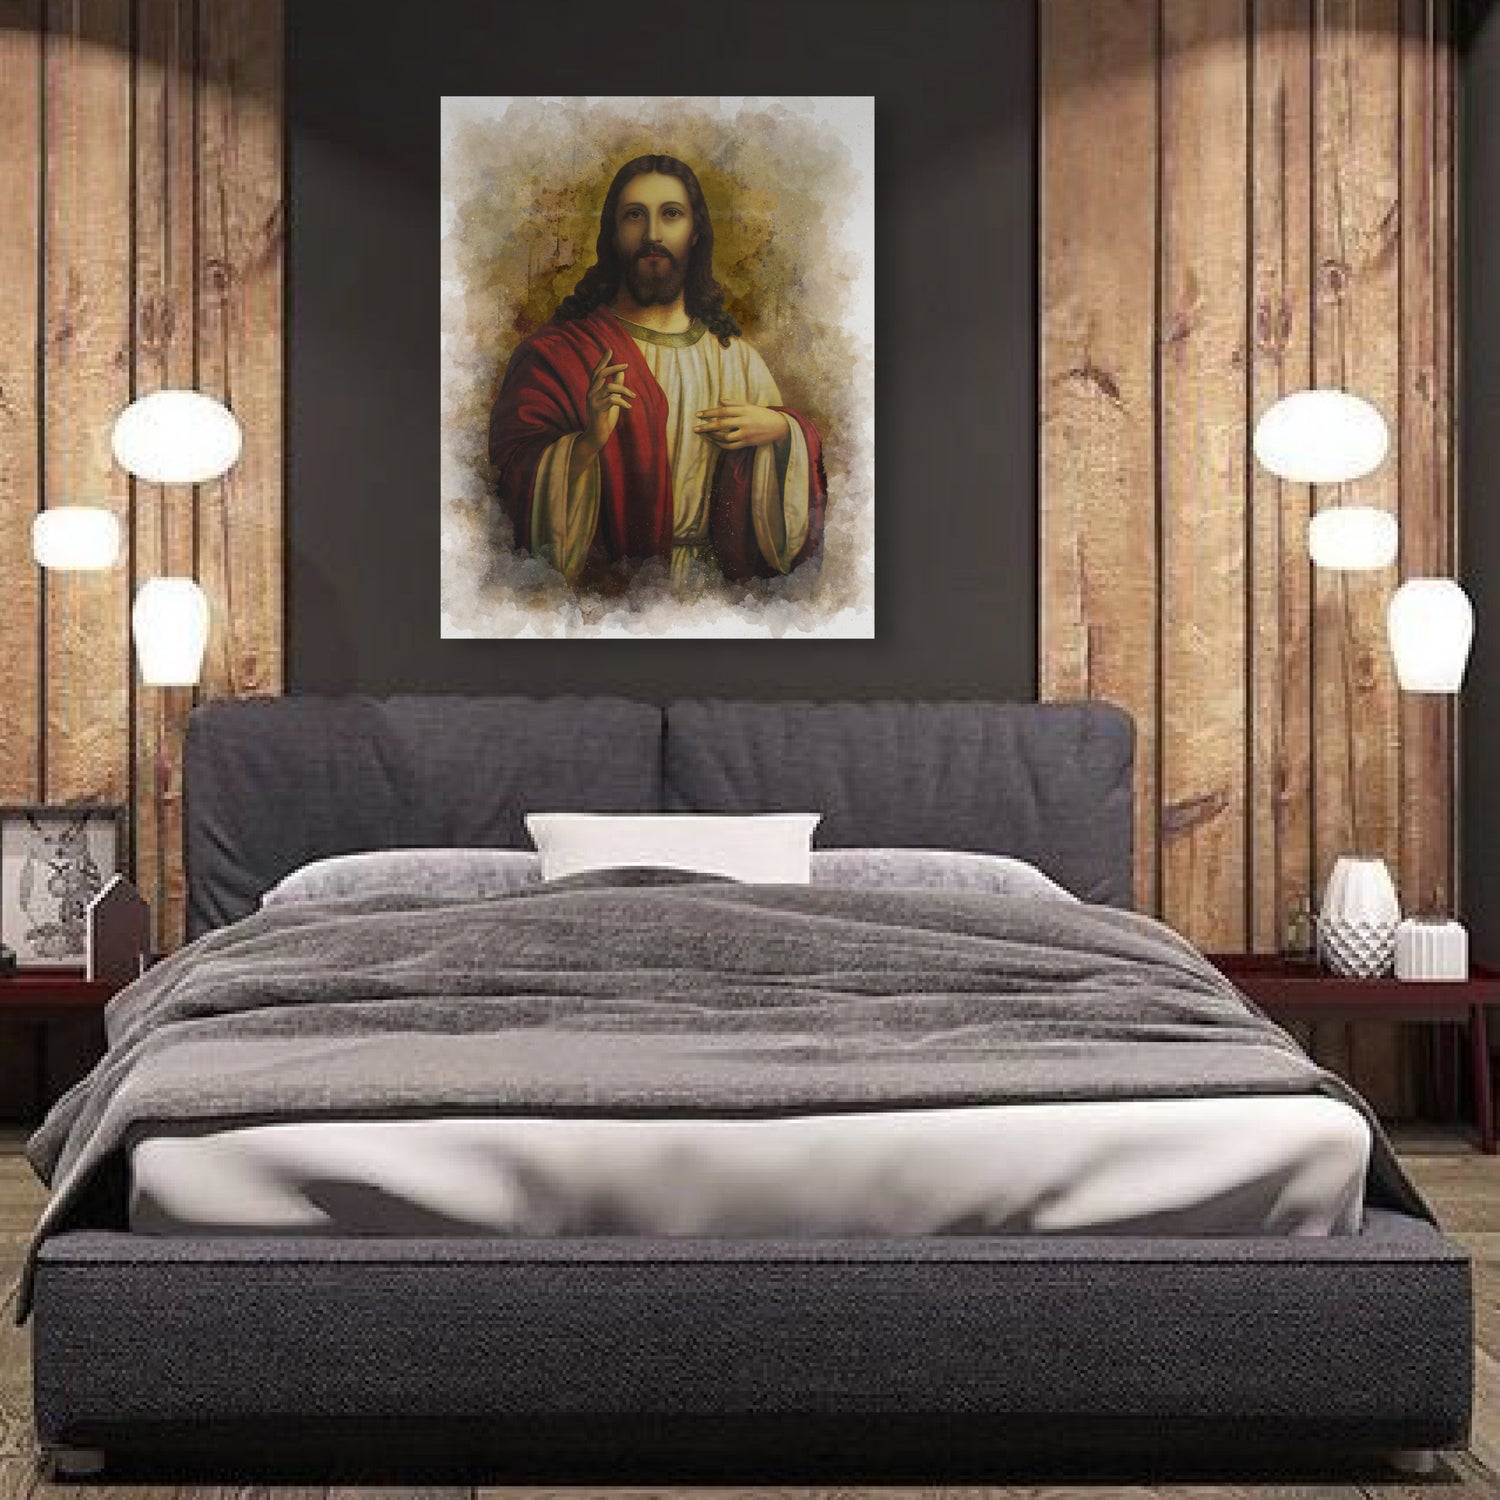 Religious Wall Art of Jesus on Bedroom